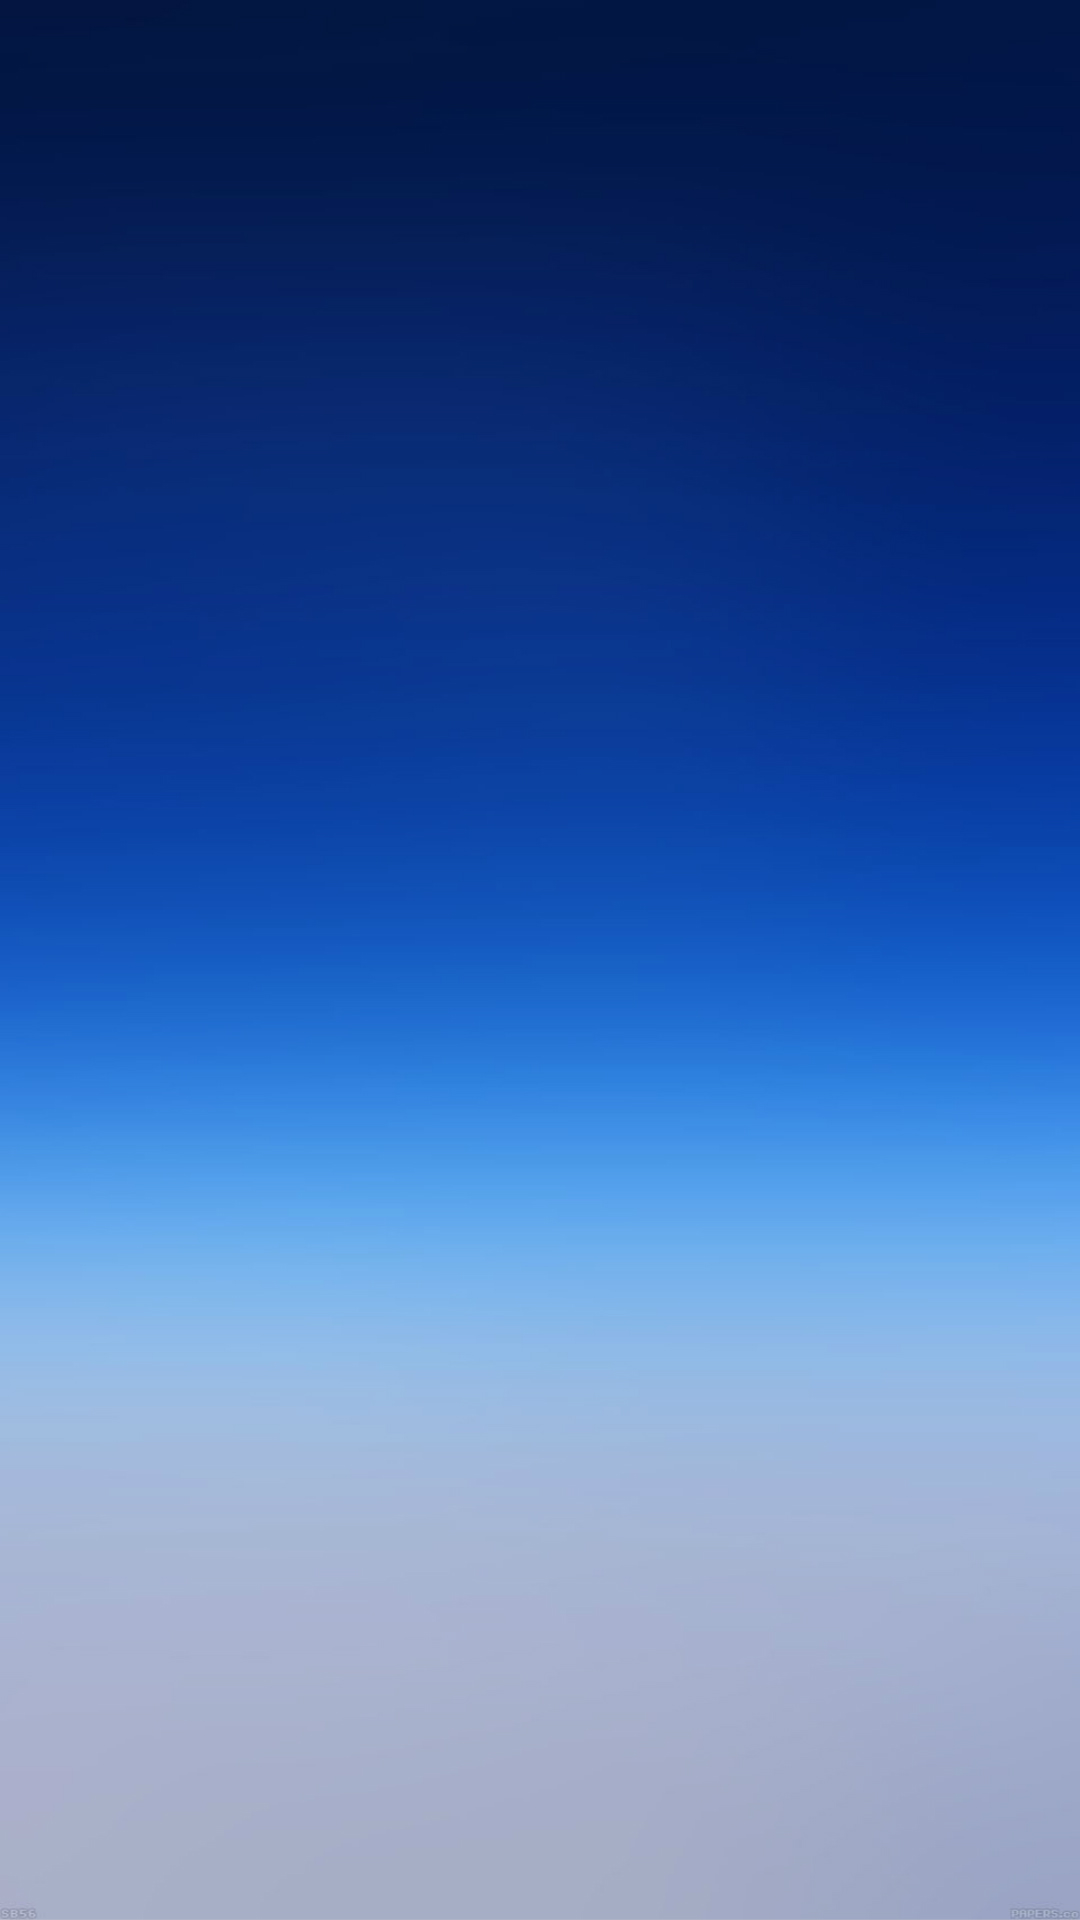 blue wallpaper iphone 6,sky,blue,daytime,atmosphere,cobalt blue